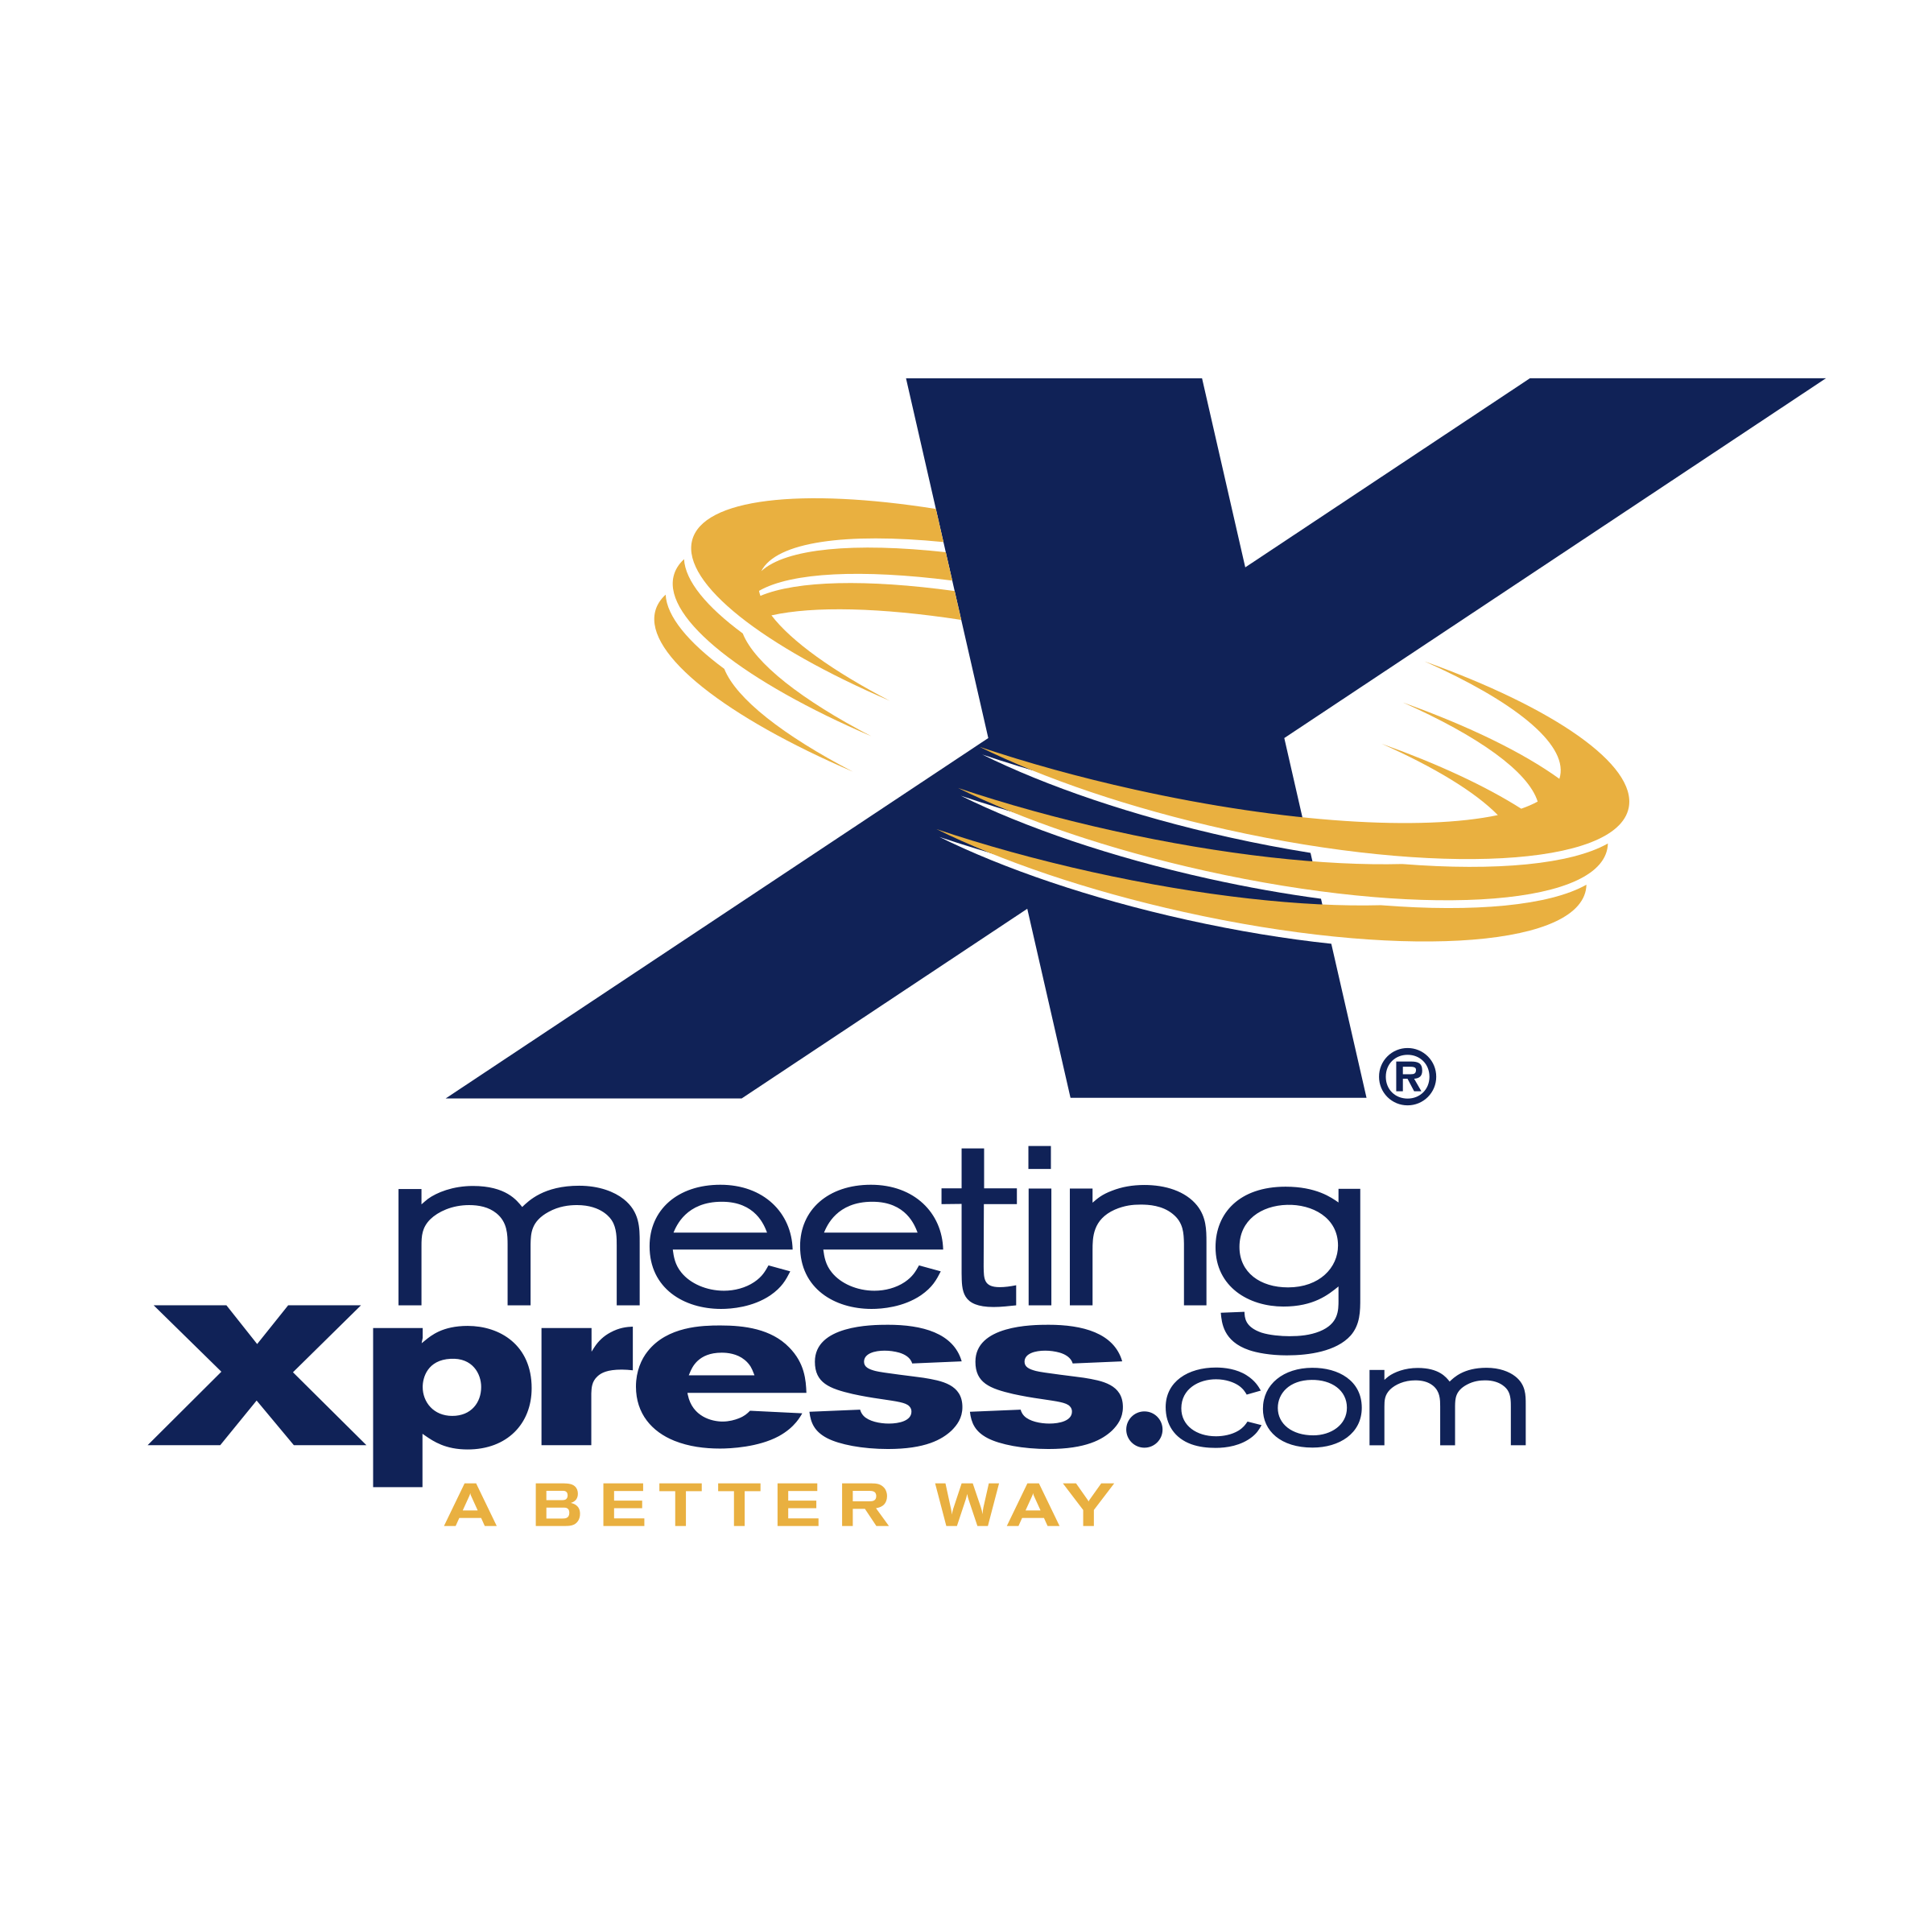 Xpress Logo - Meeting Xpress Logo PNG Transparent & SVG Vector - Freebie Supply